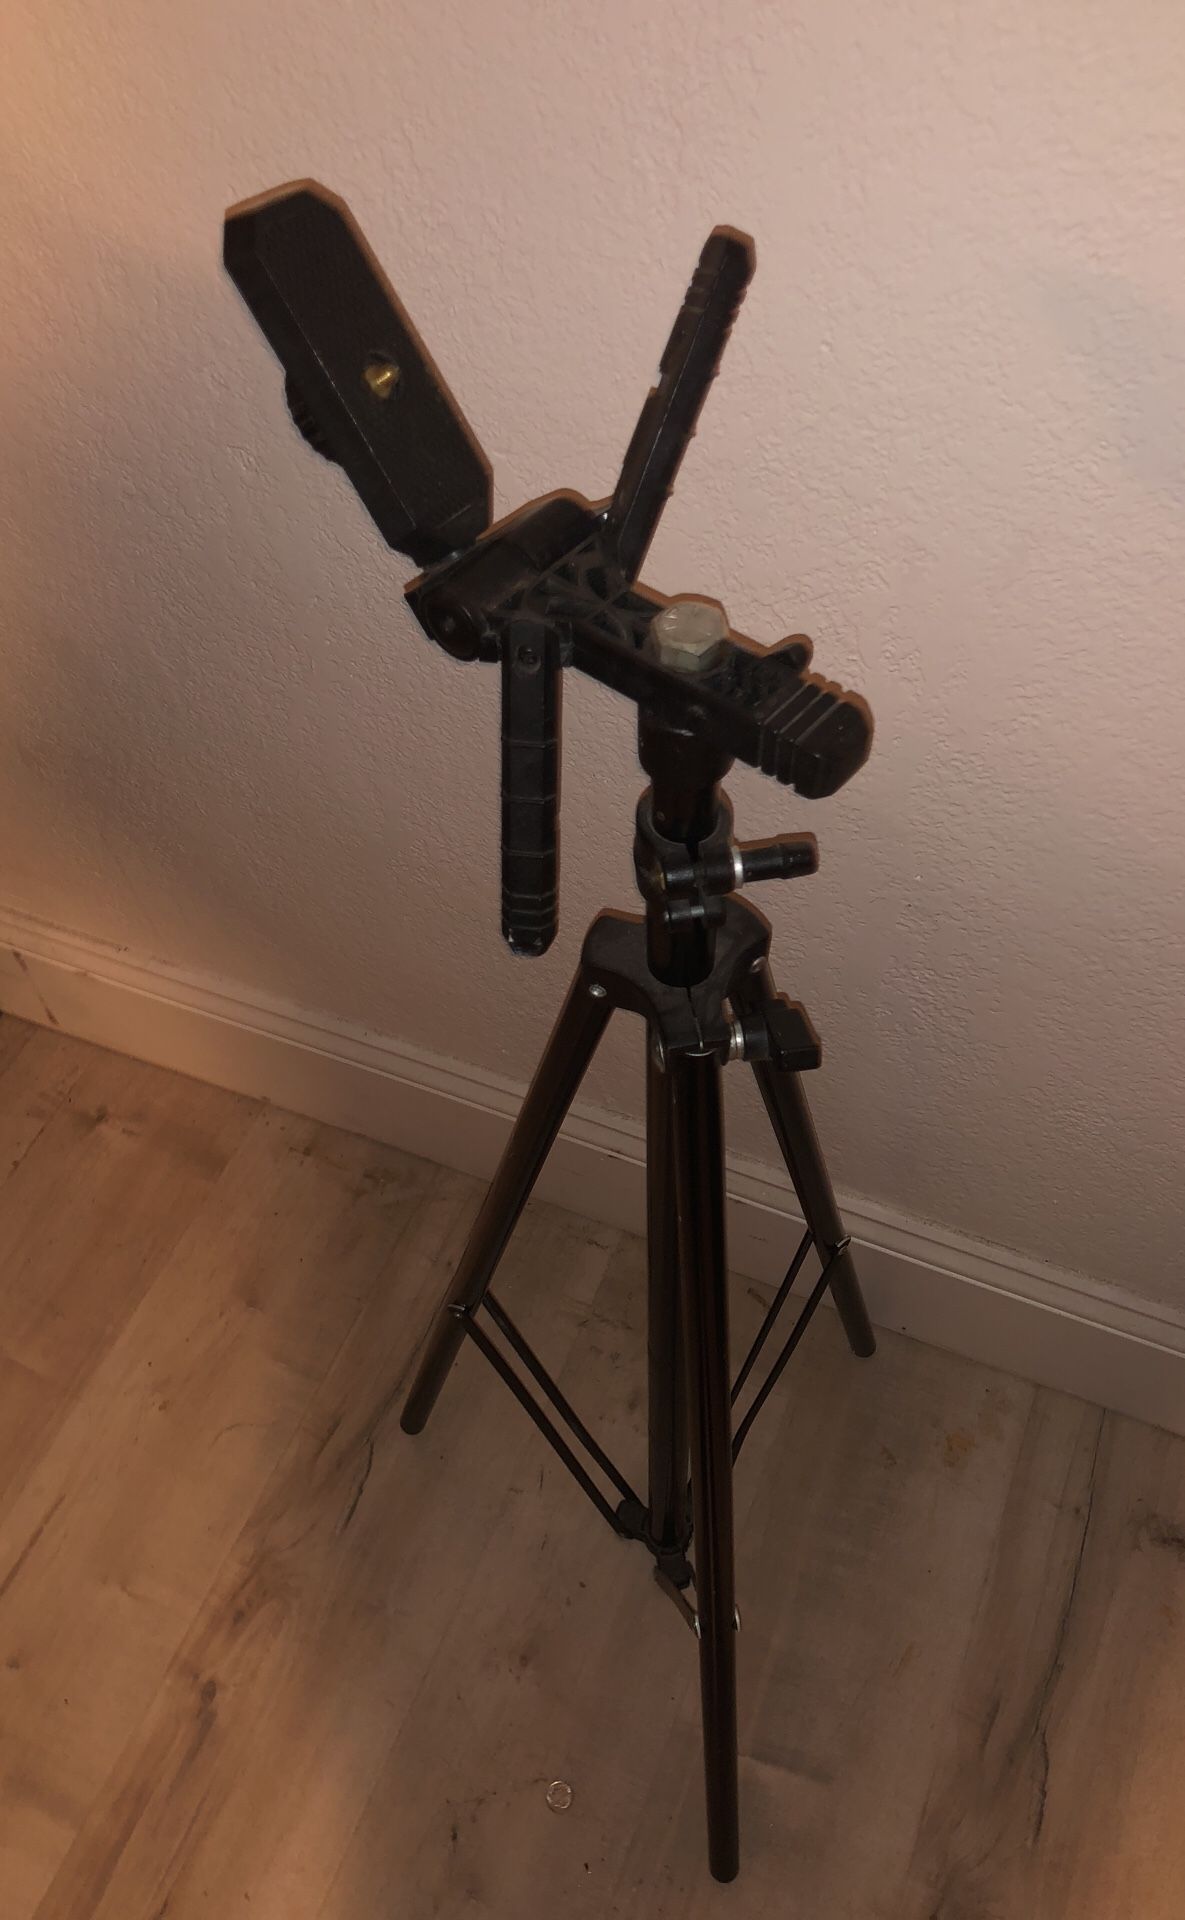 Camera stand